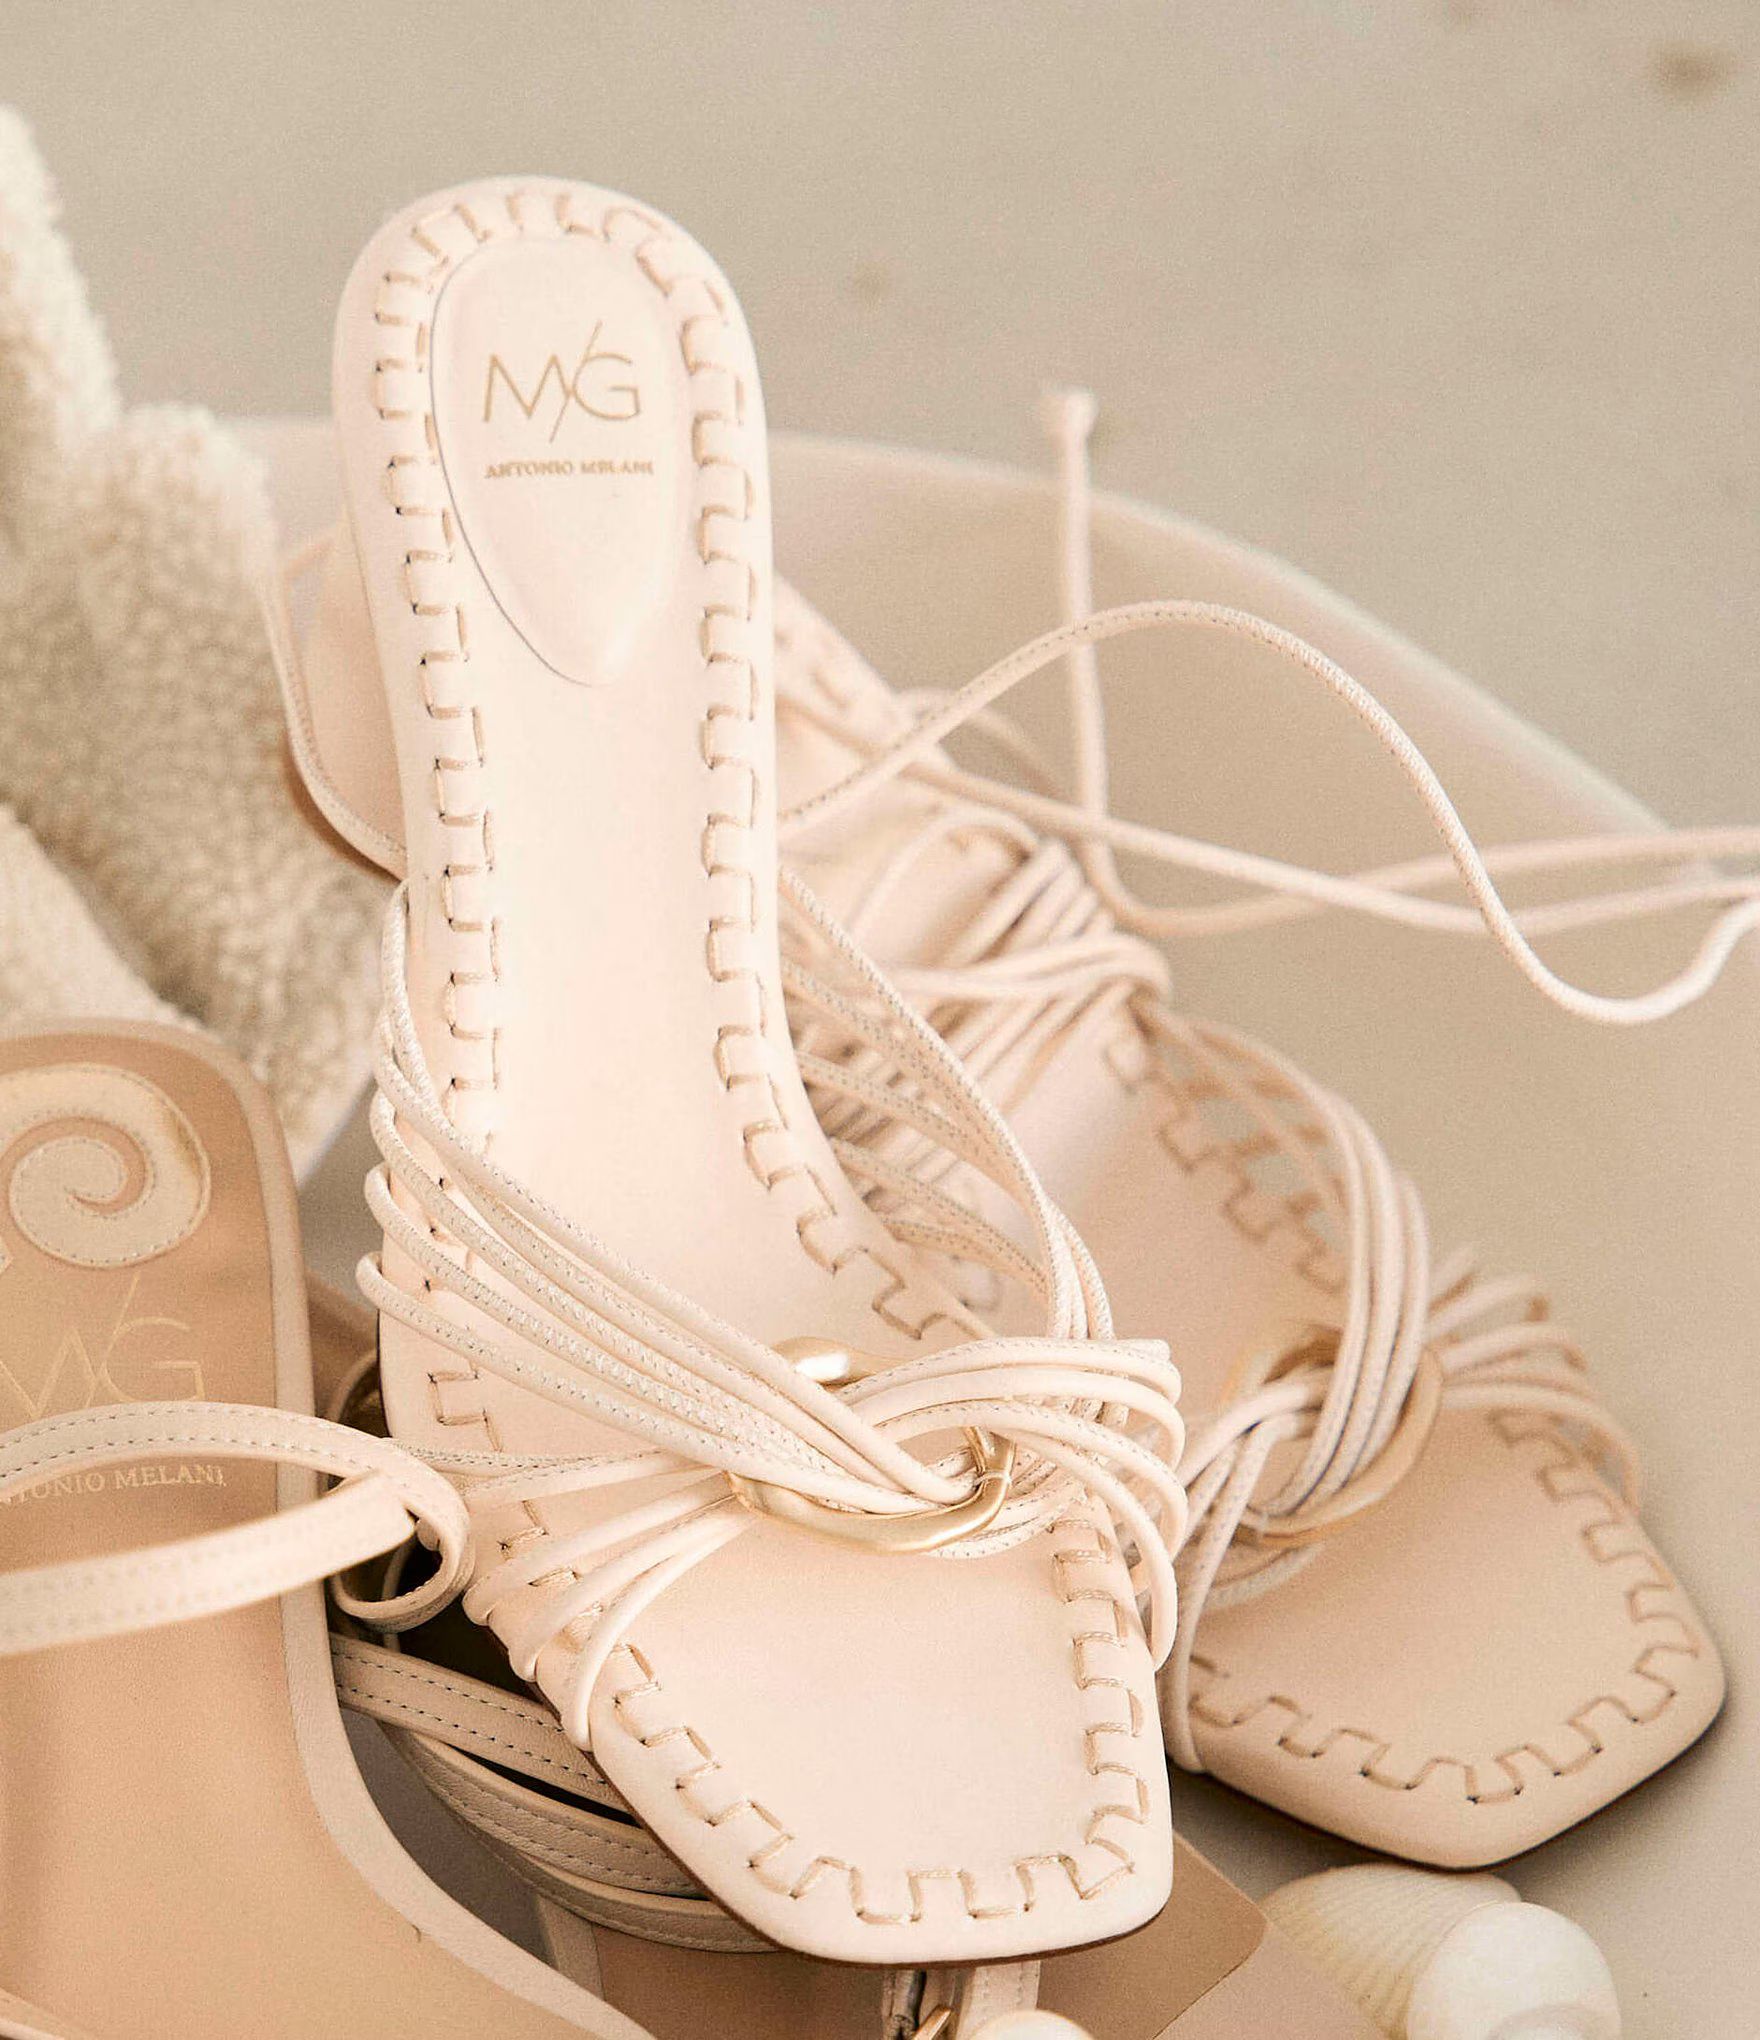 Antonio Melani x M.G. Style - The Basic Block Heels | Dillard's | Dillard's